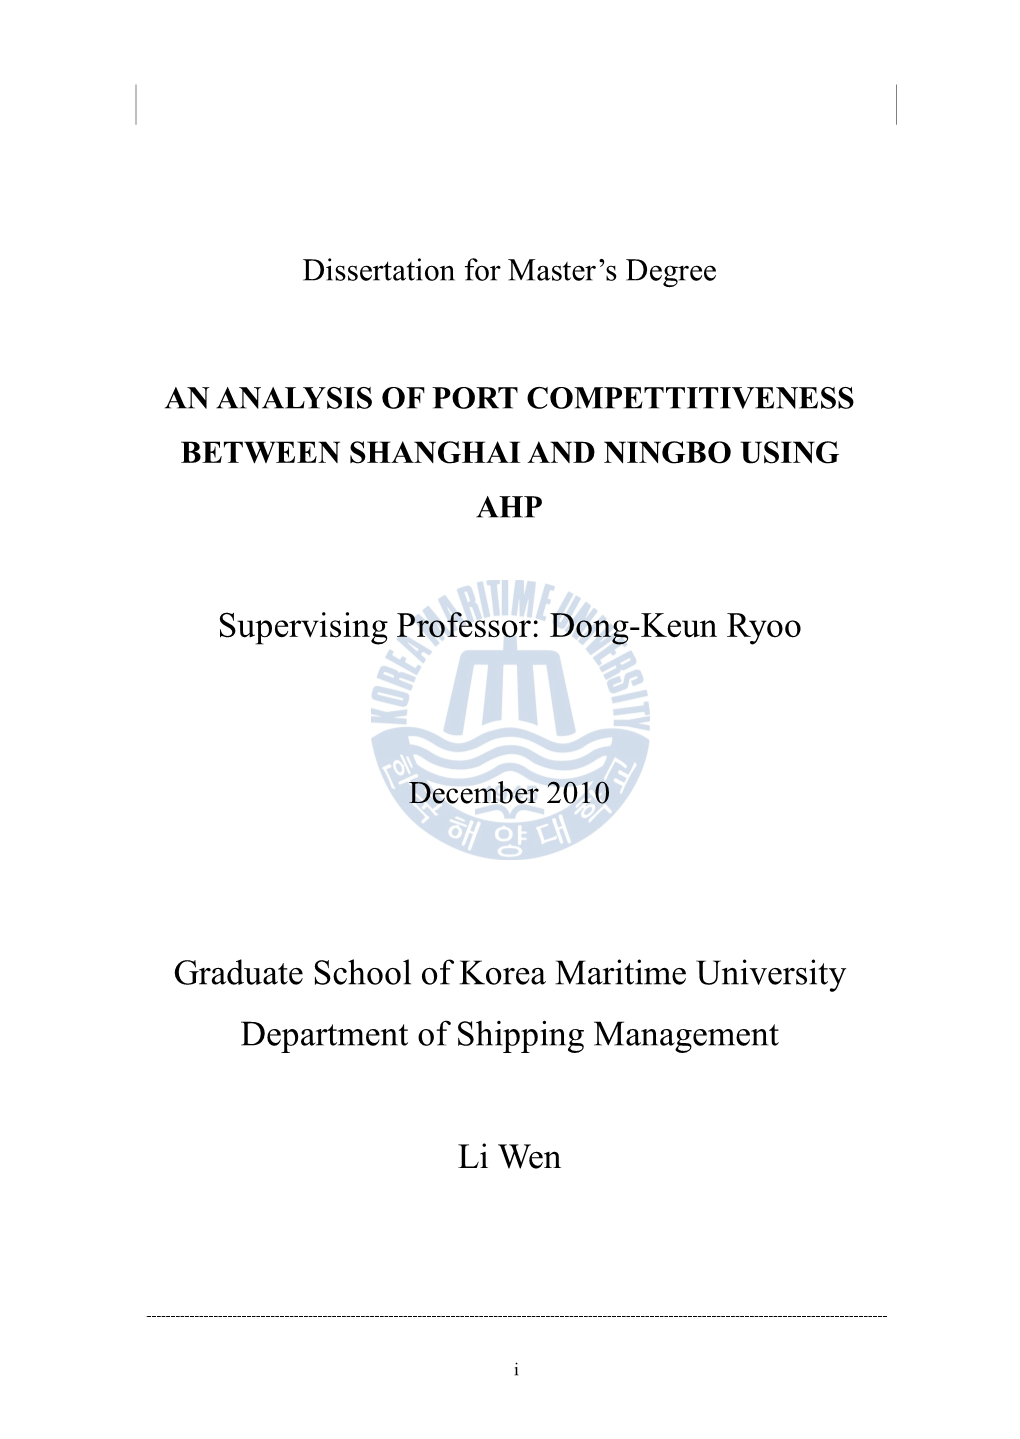 Supervising Professor: Dong-Keun Ryoo Graduate School of Korea Maritime University Department of Shipping Management Li